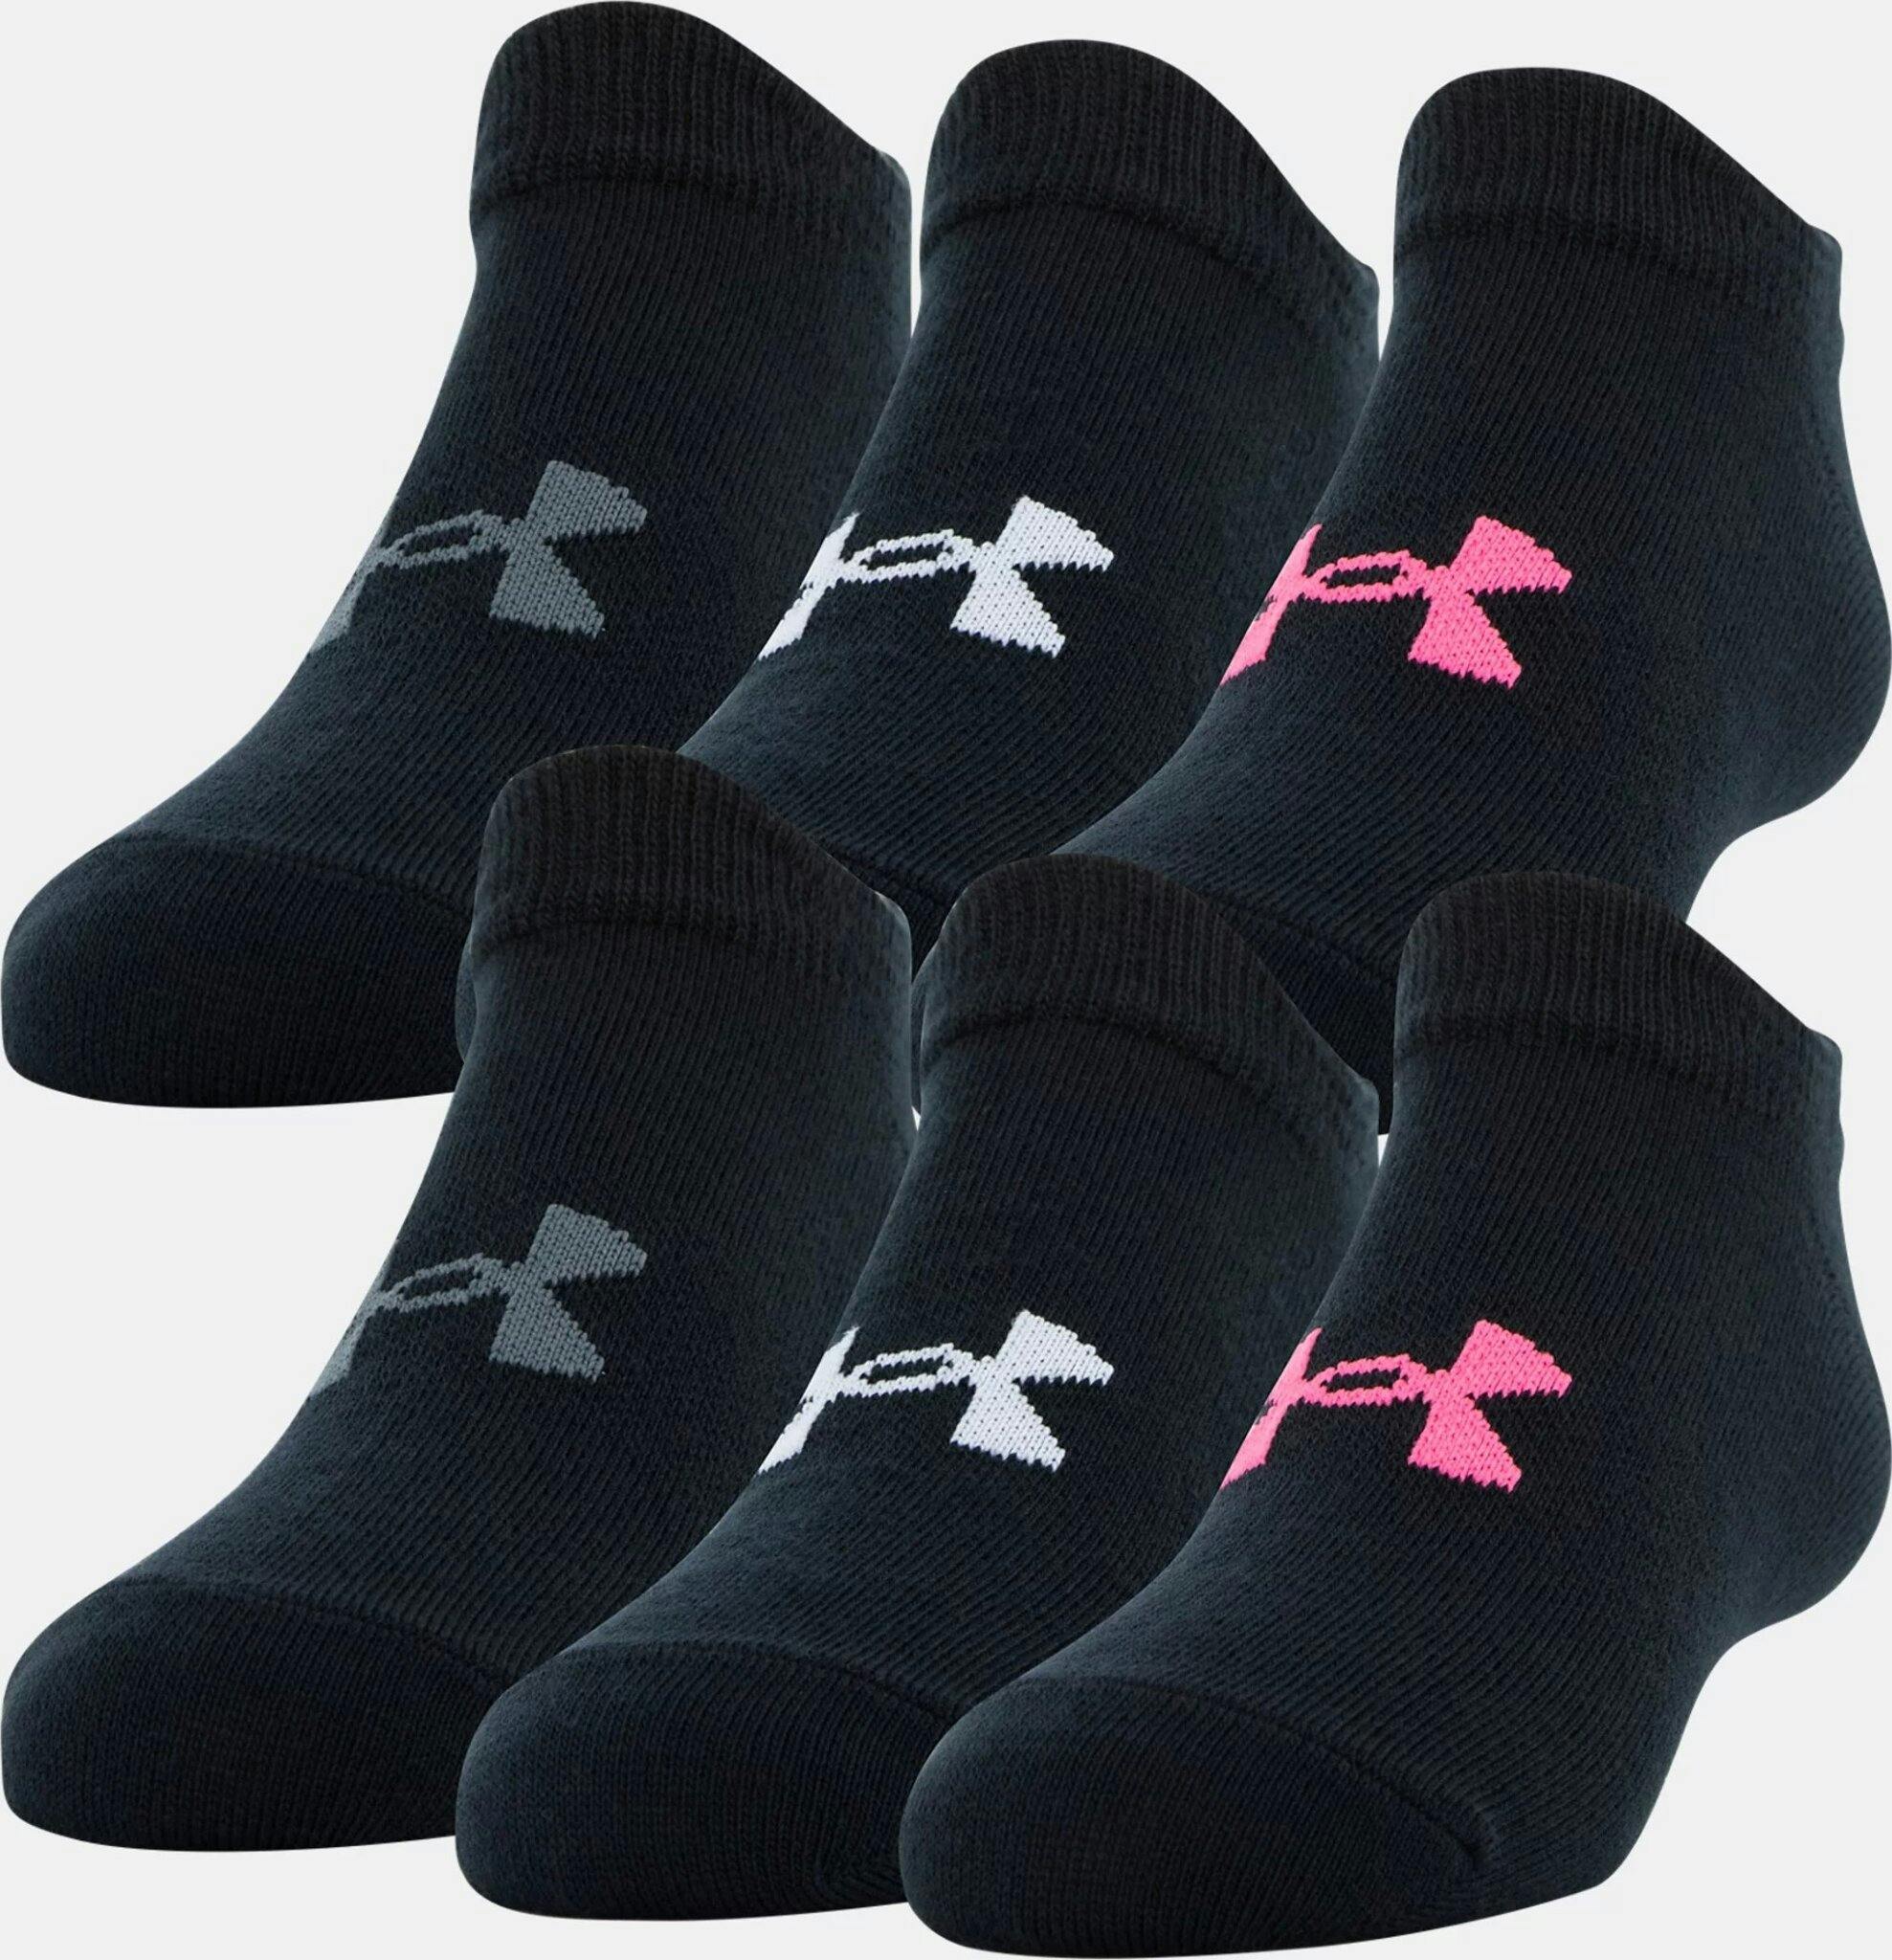 Product image for UA Essentials No Show Socks - 6 Pack - Girls